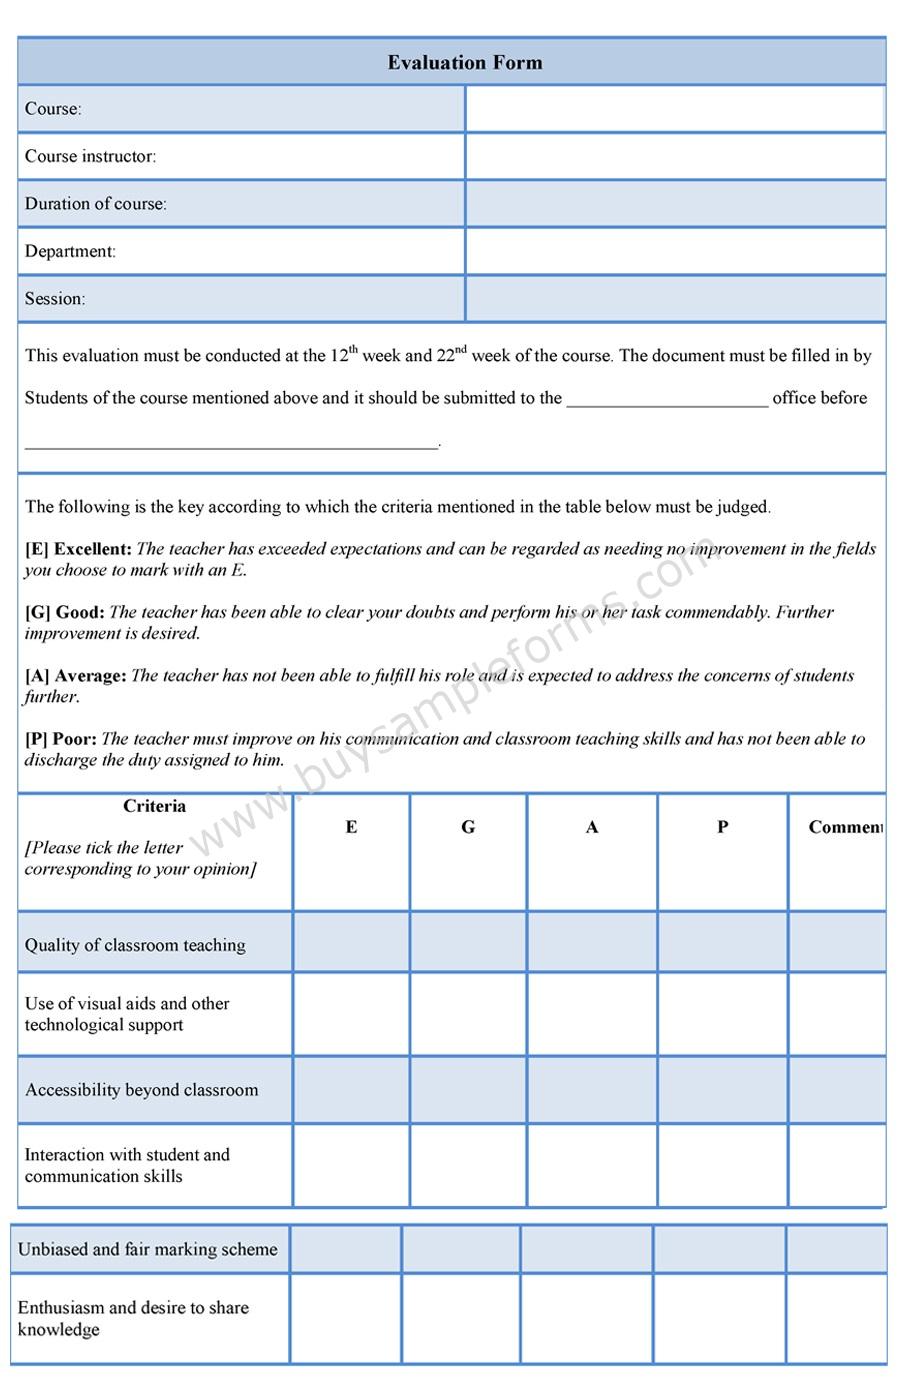 Sample Evaluation Form Evaluation Form Template Riset